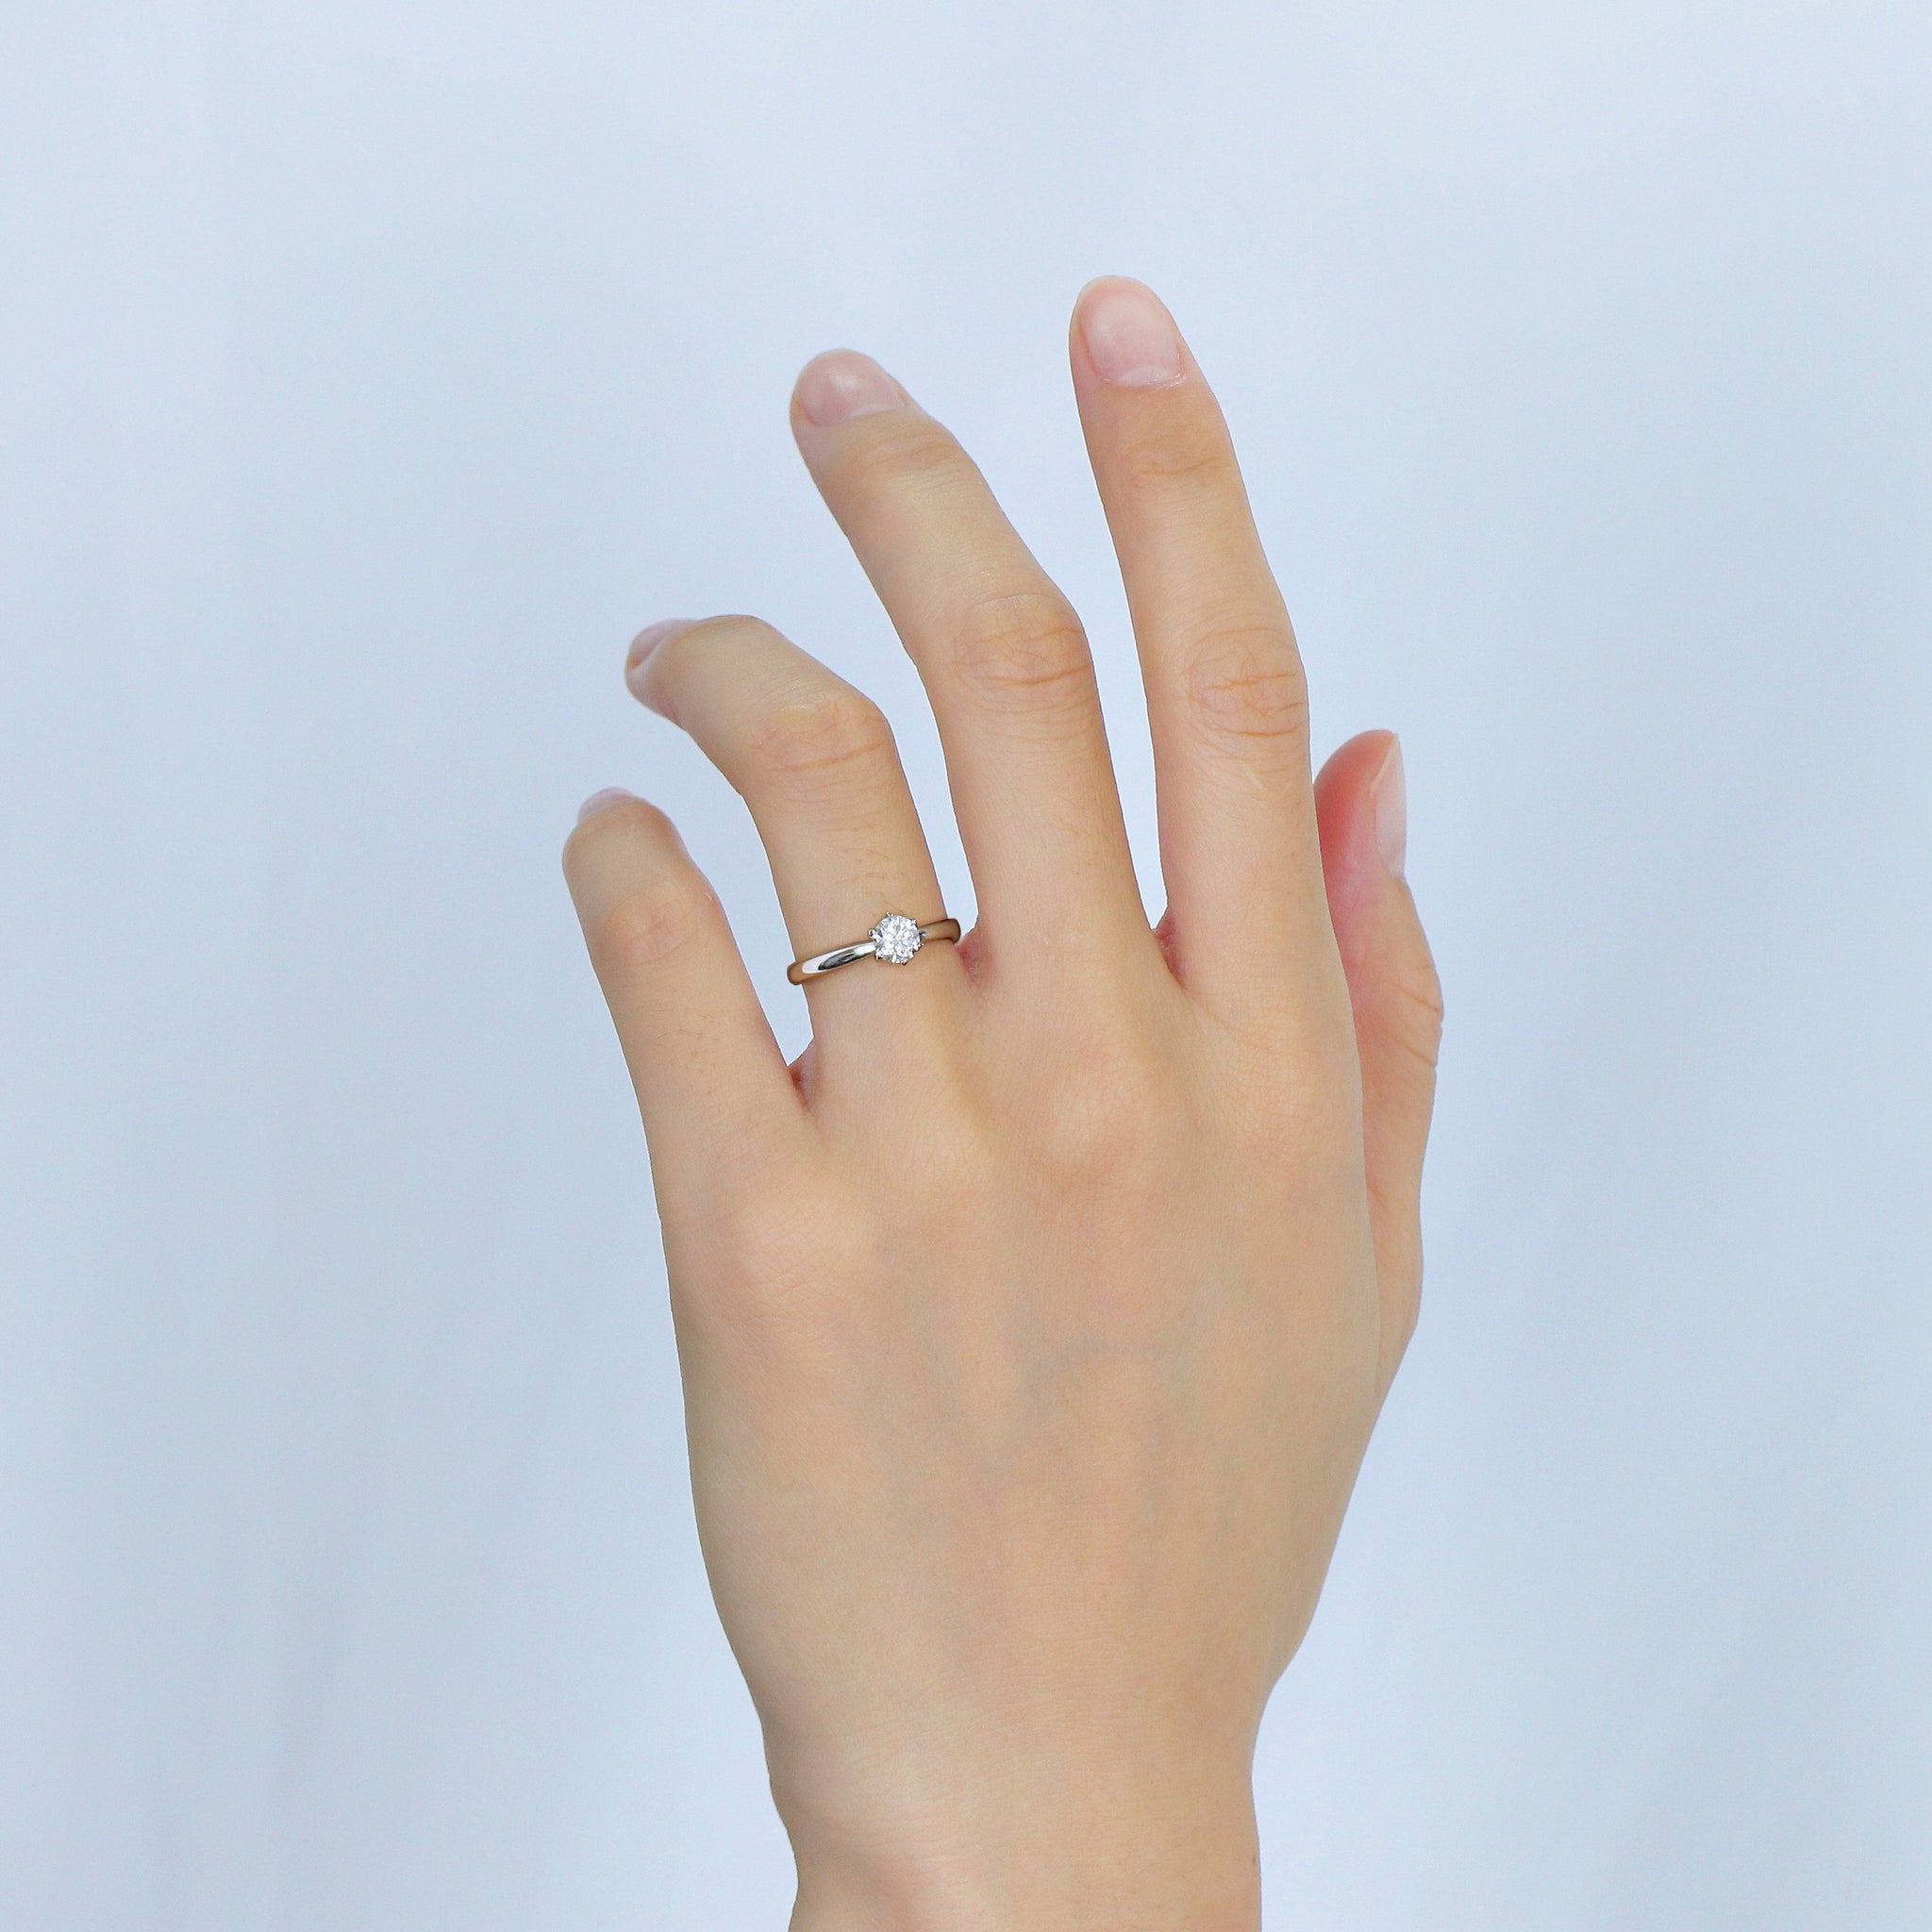 doveggs lab created CVD diamond engagement ring 14k-18k white gold 0.5 carat center 5mm def color round diamond ring for women - DovEggs-Seattle